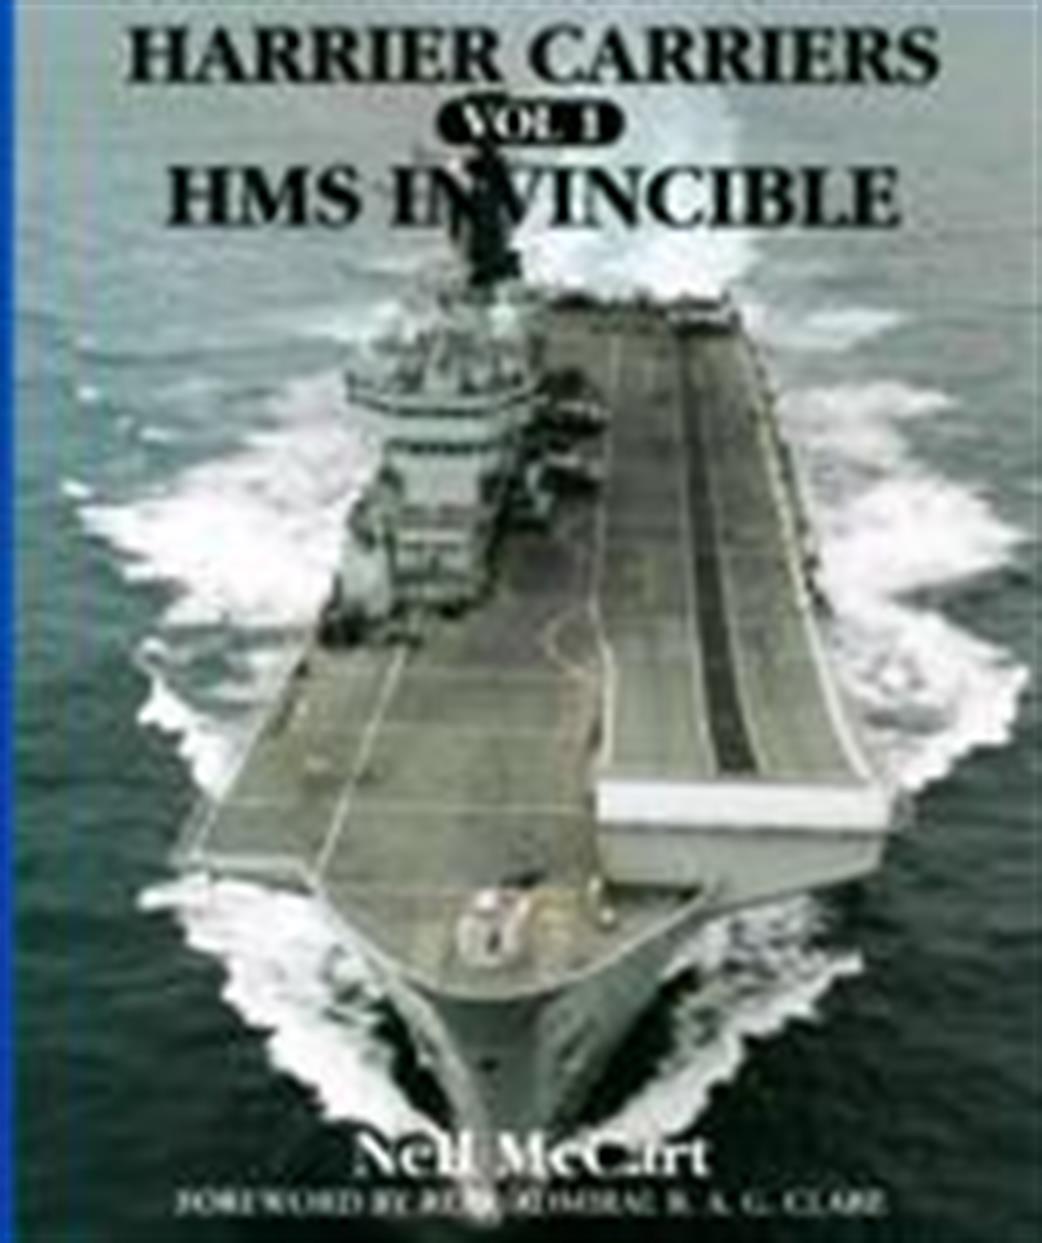 9781901225082 Harrier Carriers Vol.1 HMS Invincible by Neil McCart